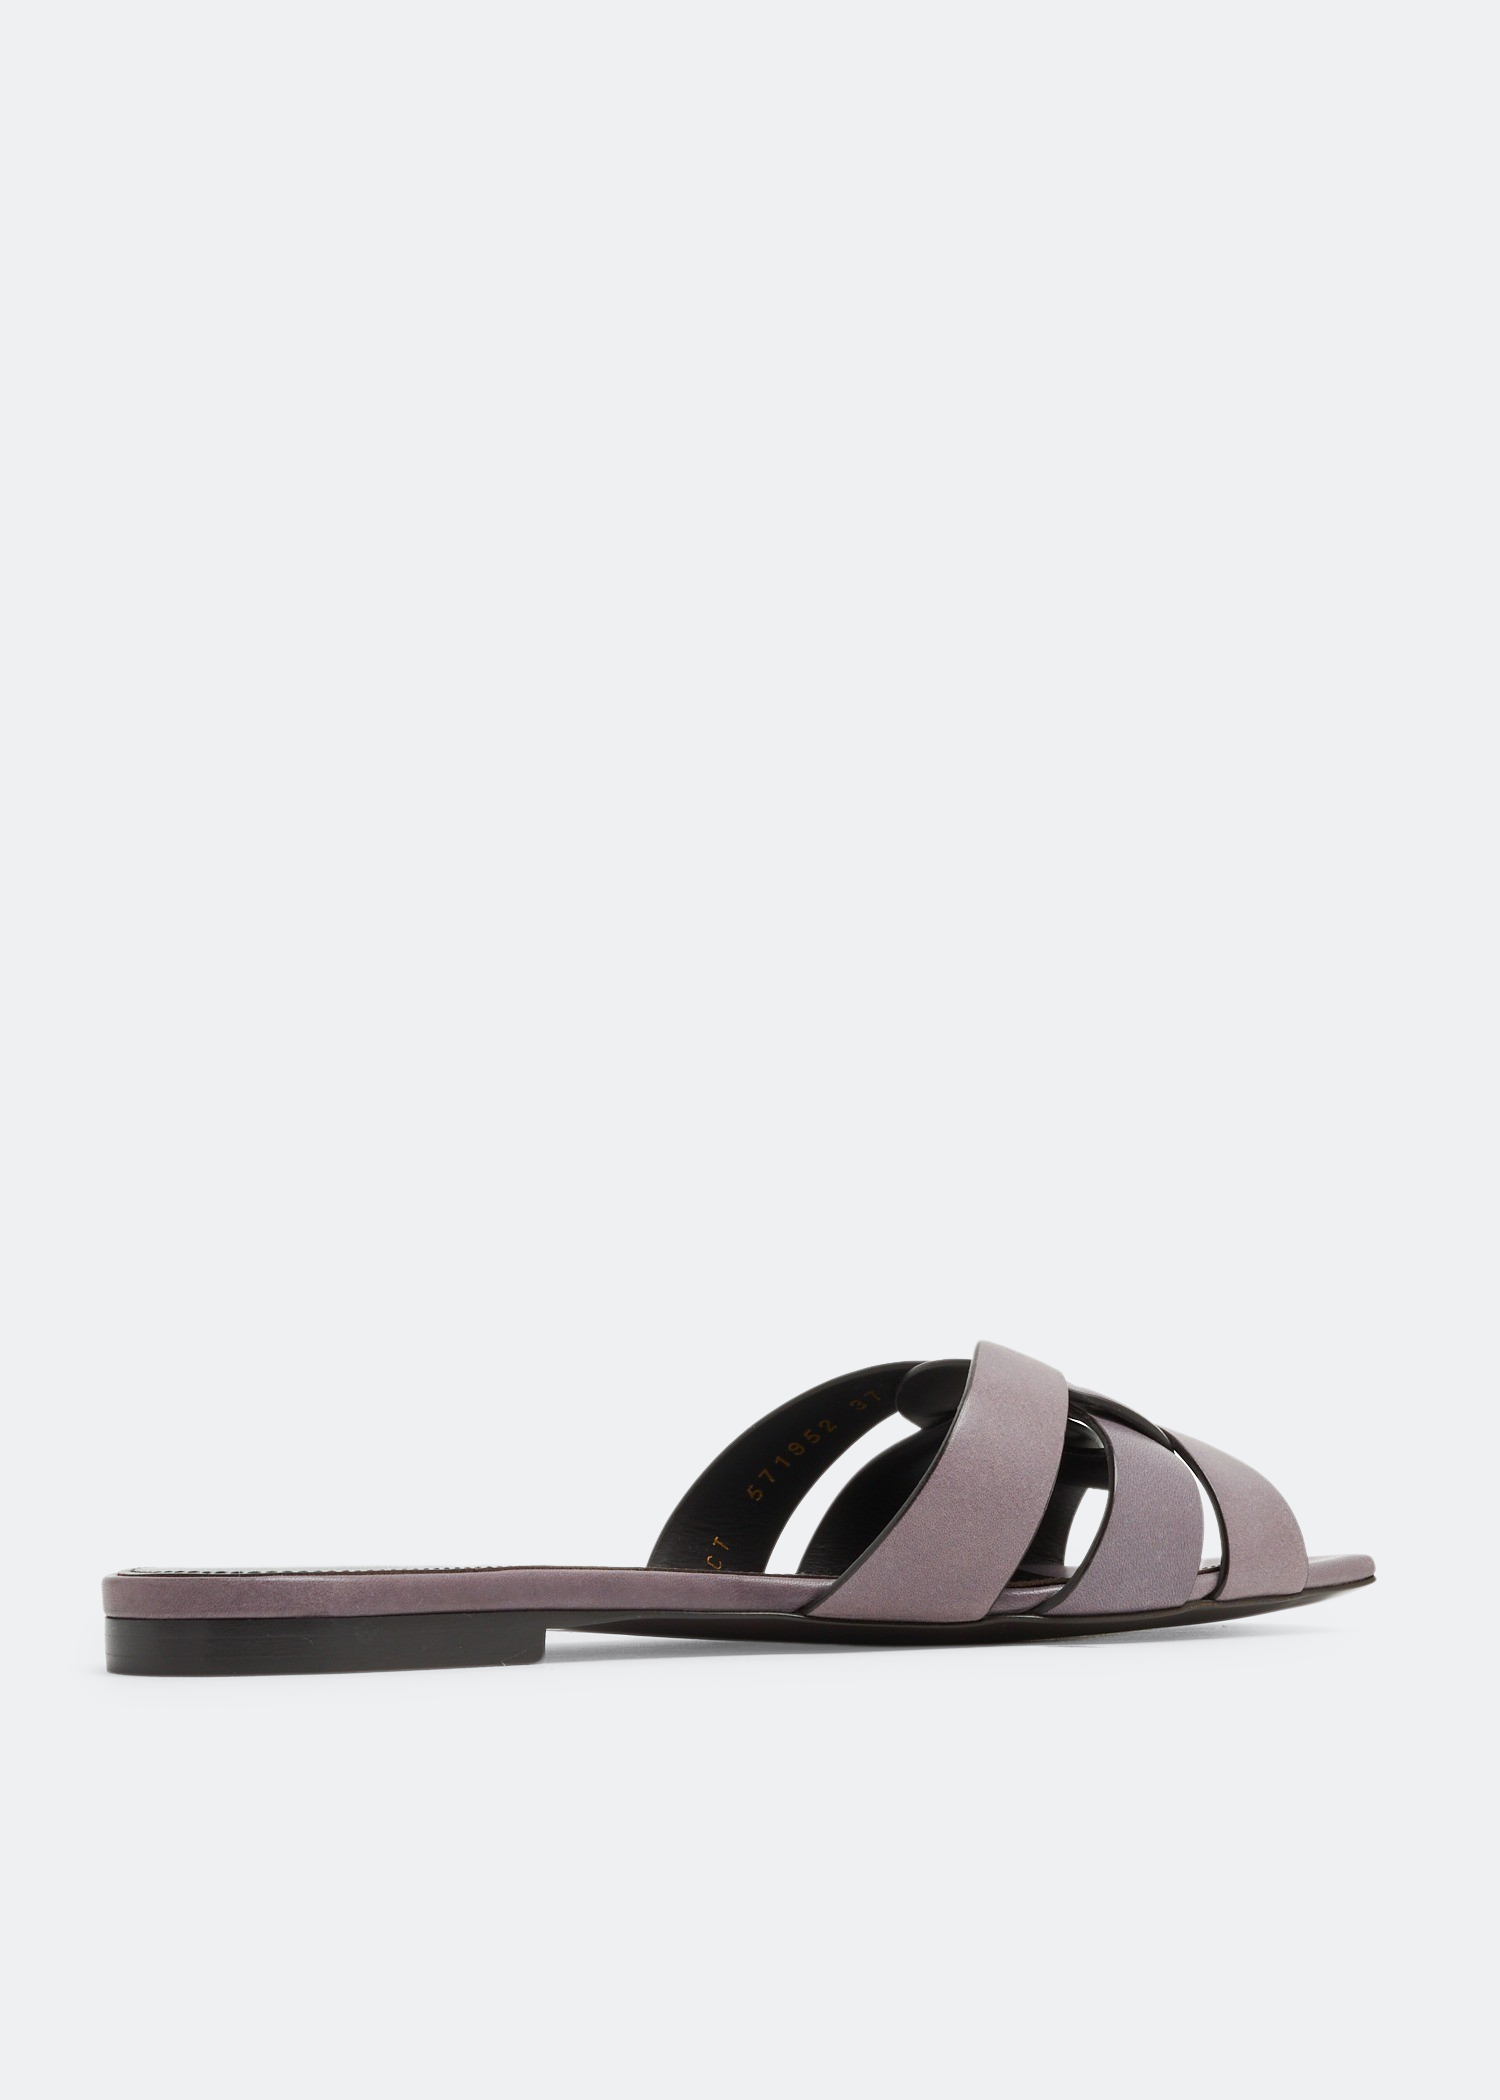 Saint Laurent Tribute leather flat sandals for Women - Grey in UAE 